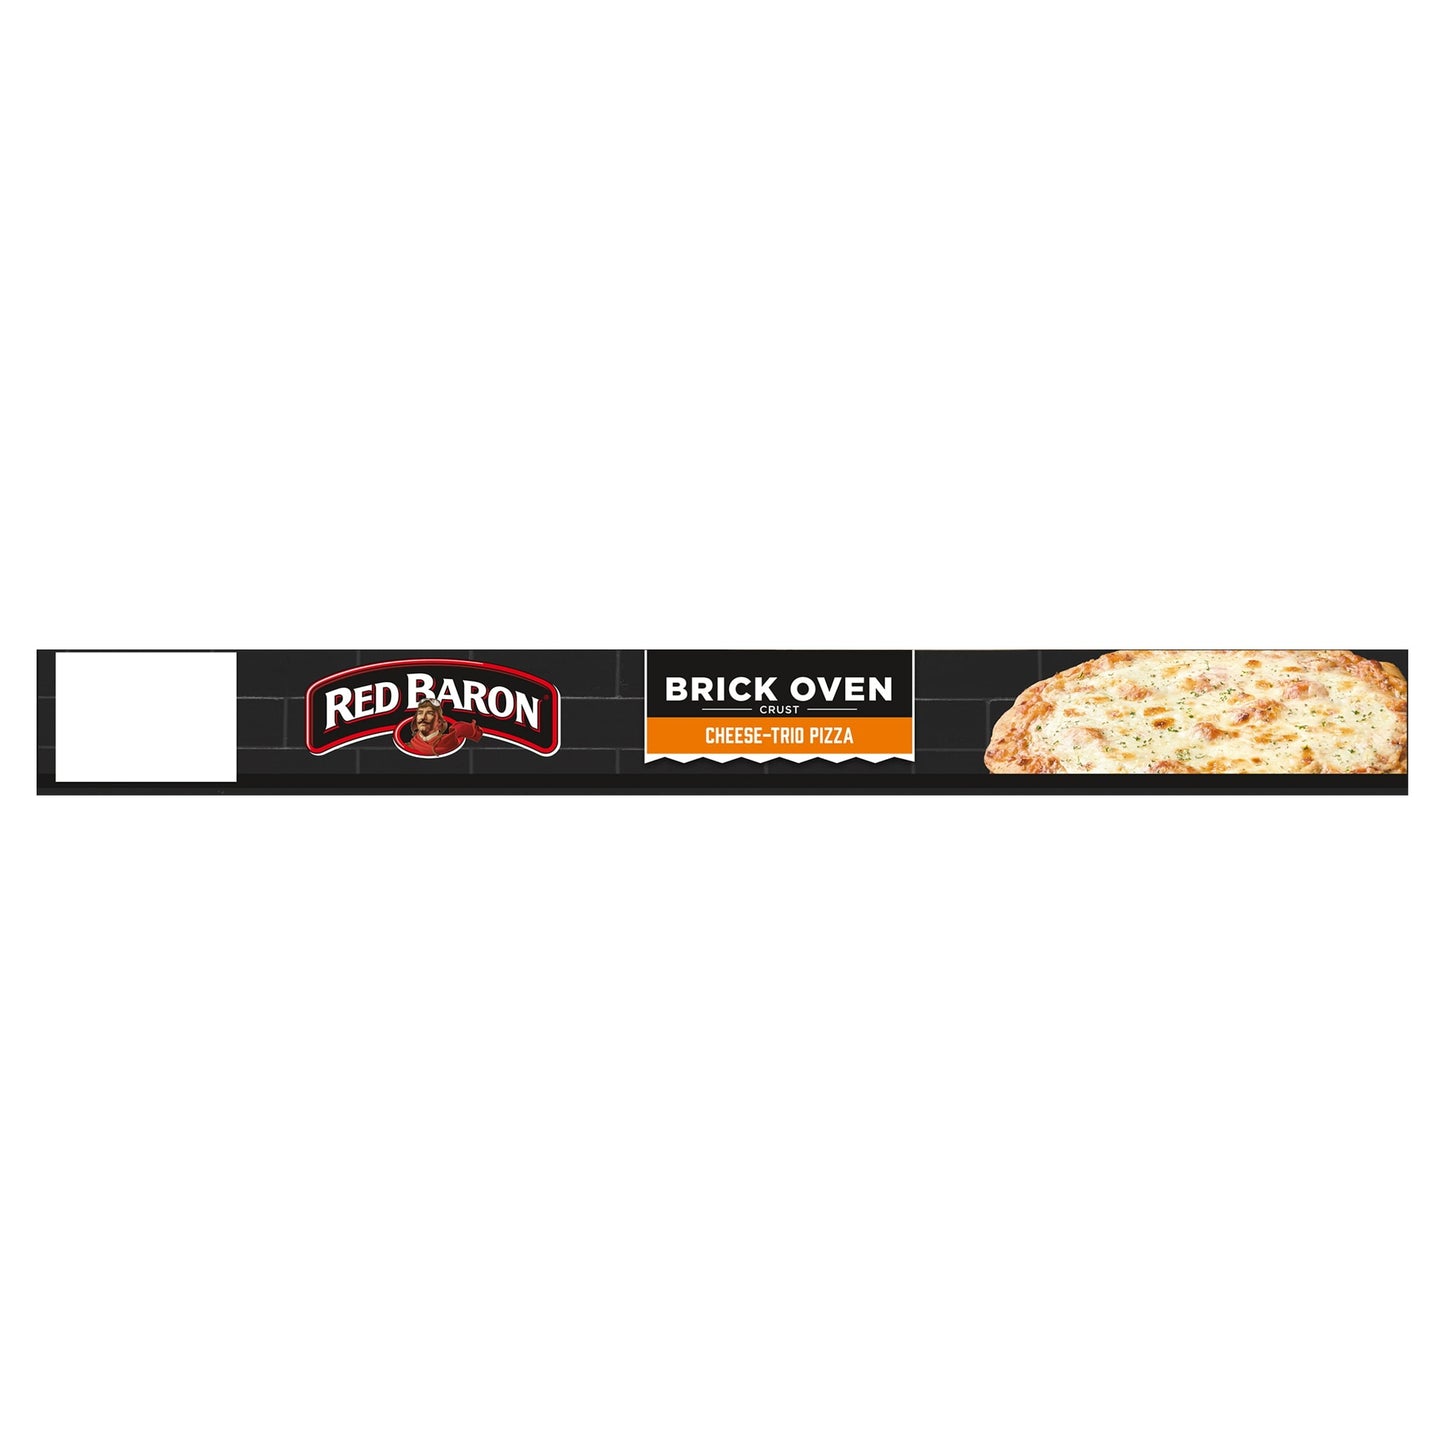 Red Baron Brick Oven Cheese Frozen Pizza 17.82oz